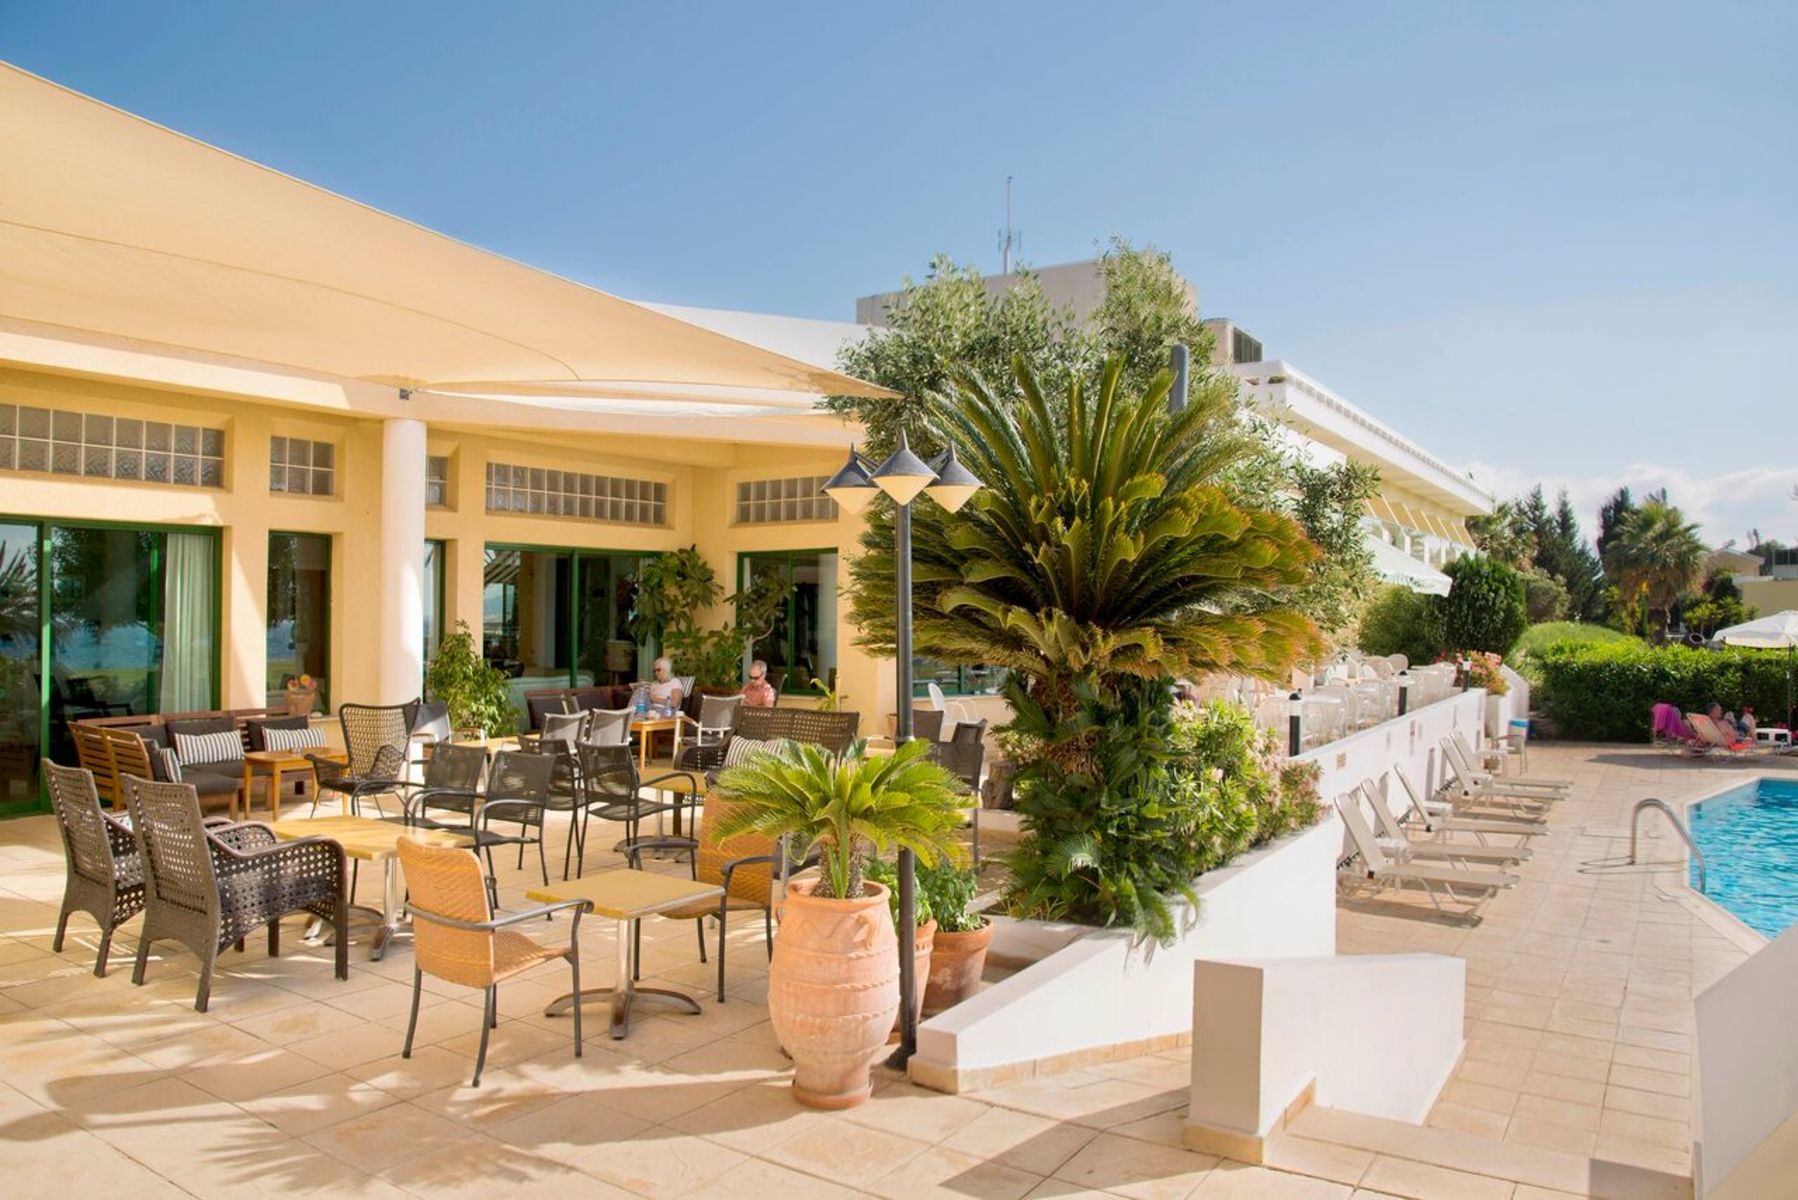 Natura Beach Hotel & Villas, Polis, West-Cyprus, Cyprus